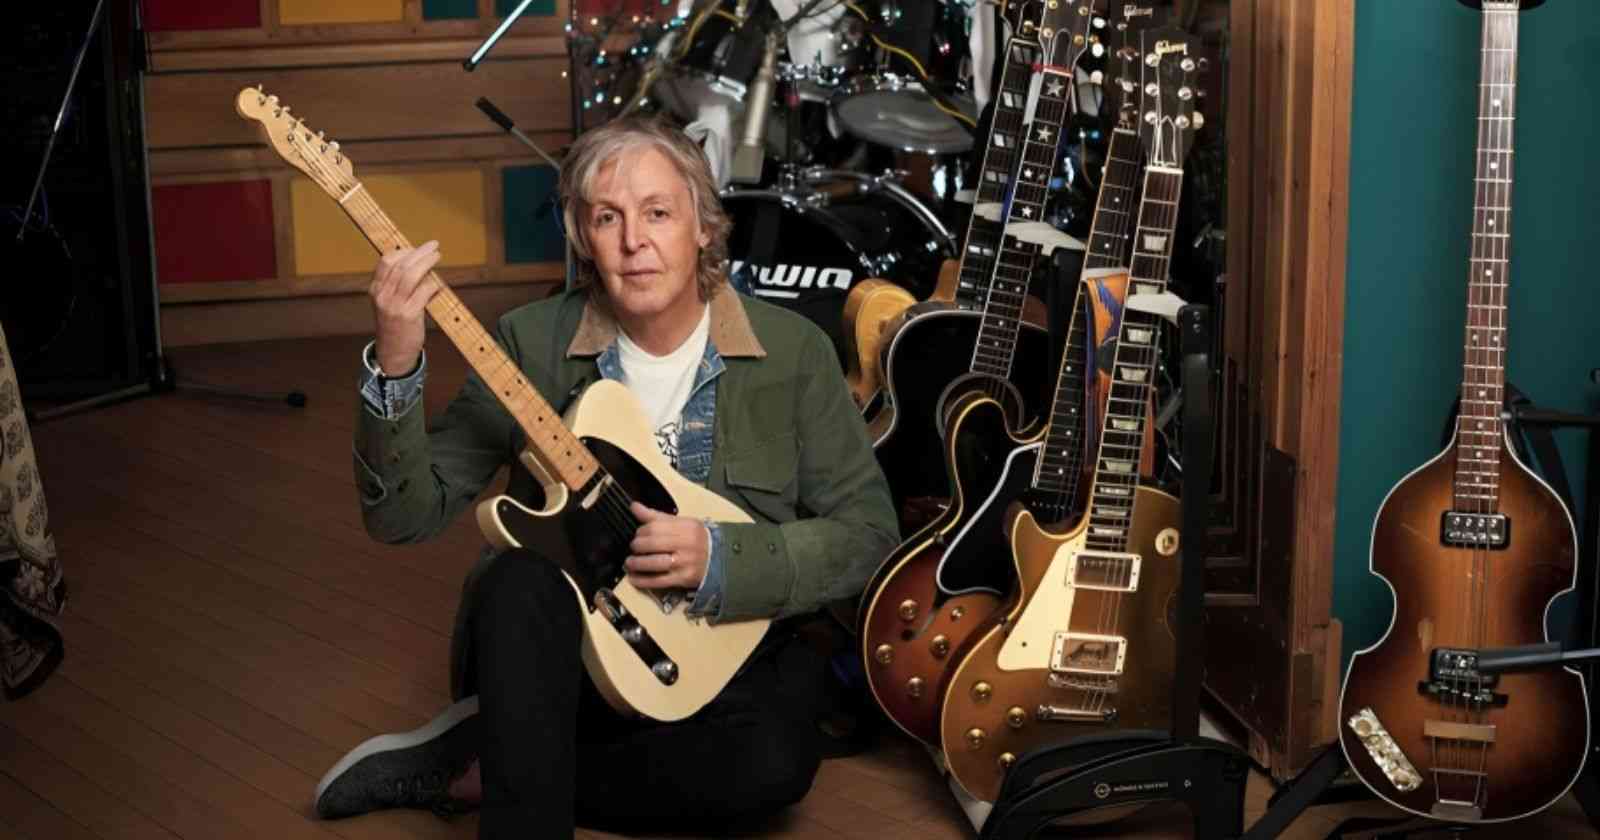 Paul McCartney with a telecaster guitar